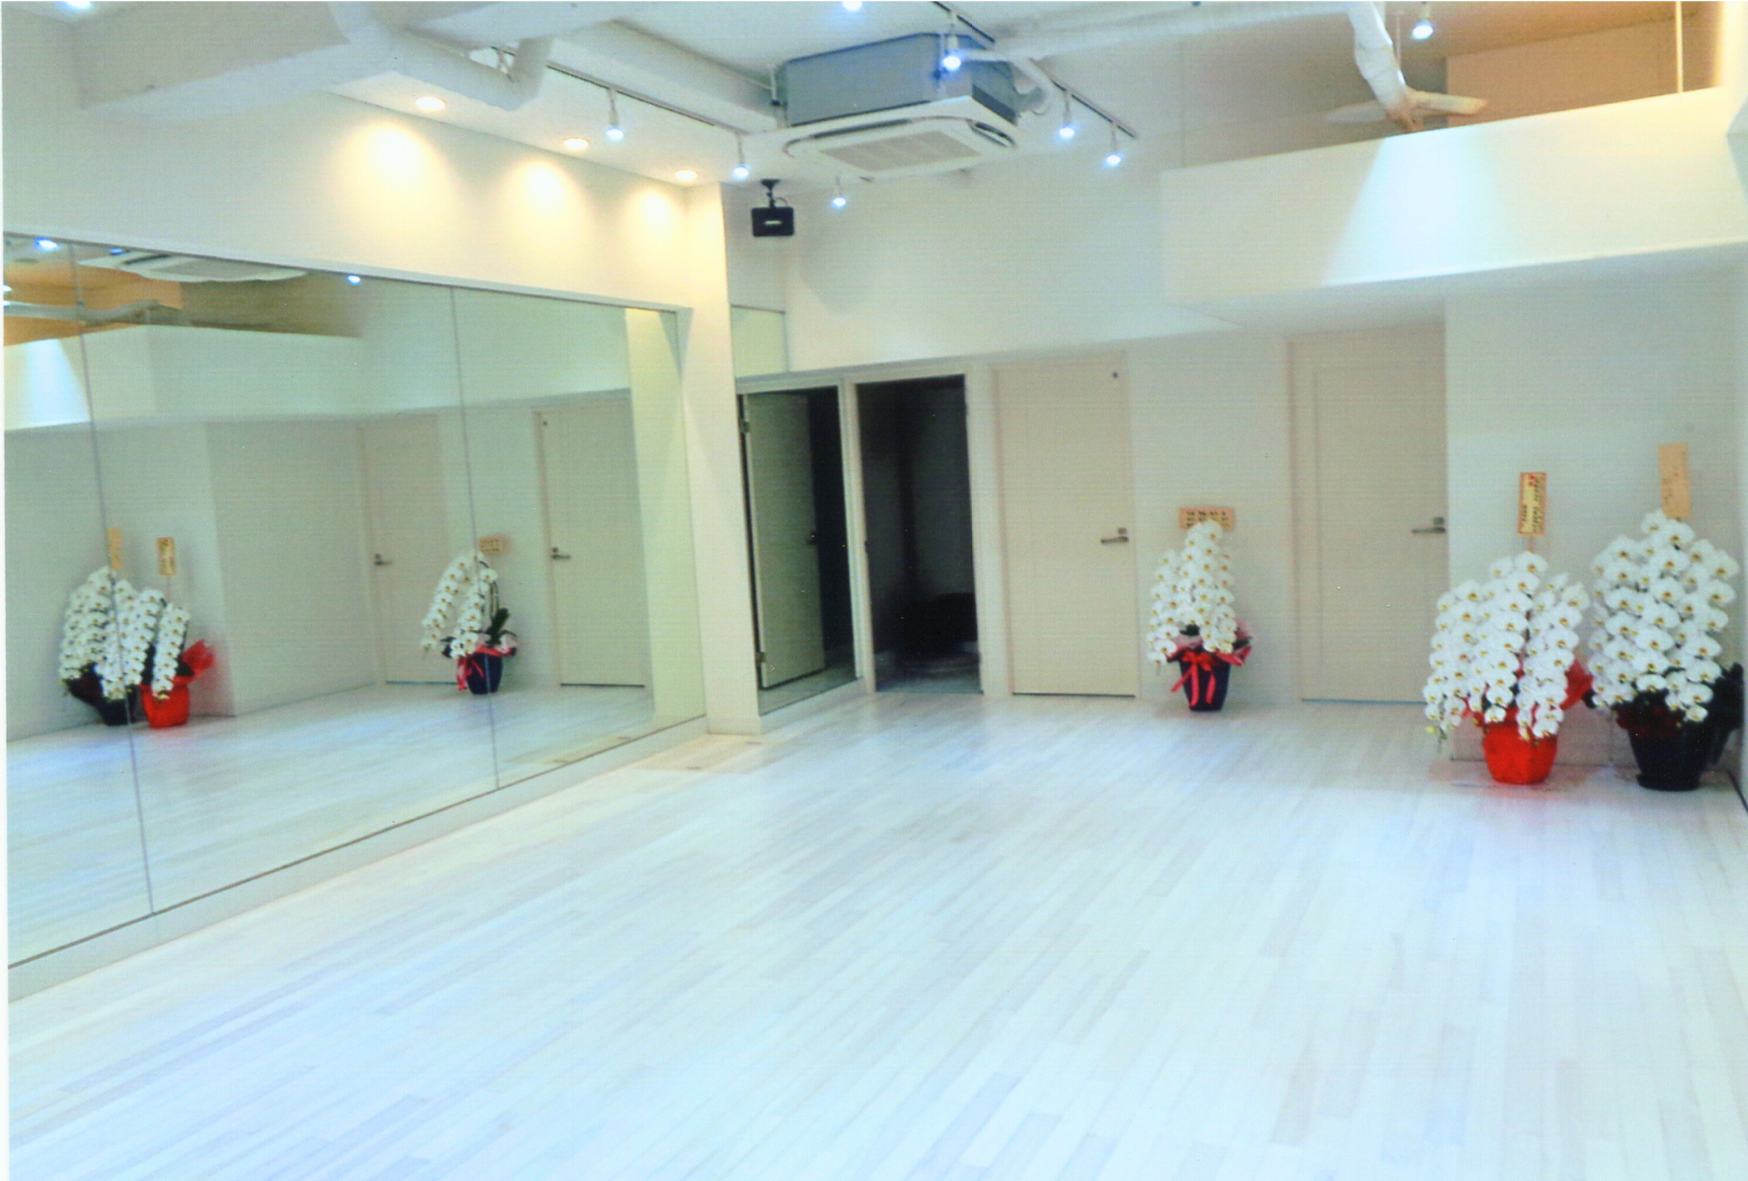 Dance Studio Le Felyイメージ2